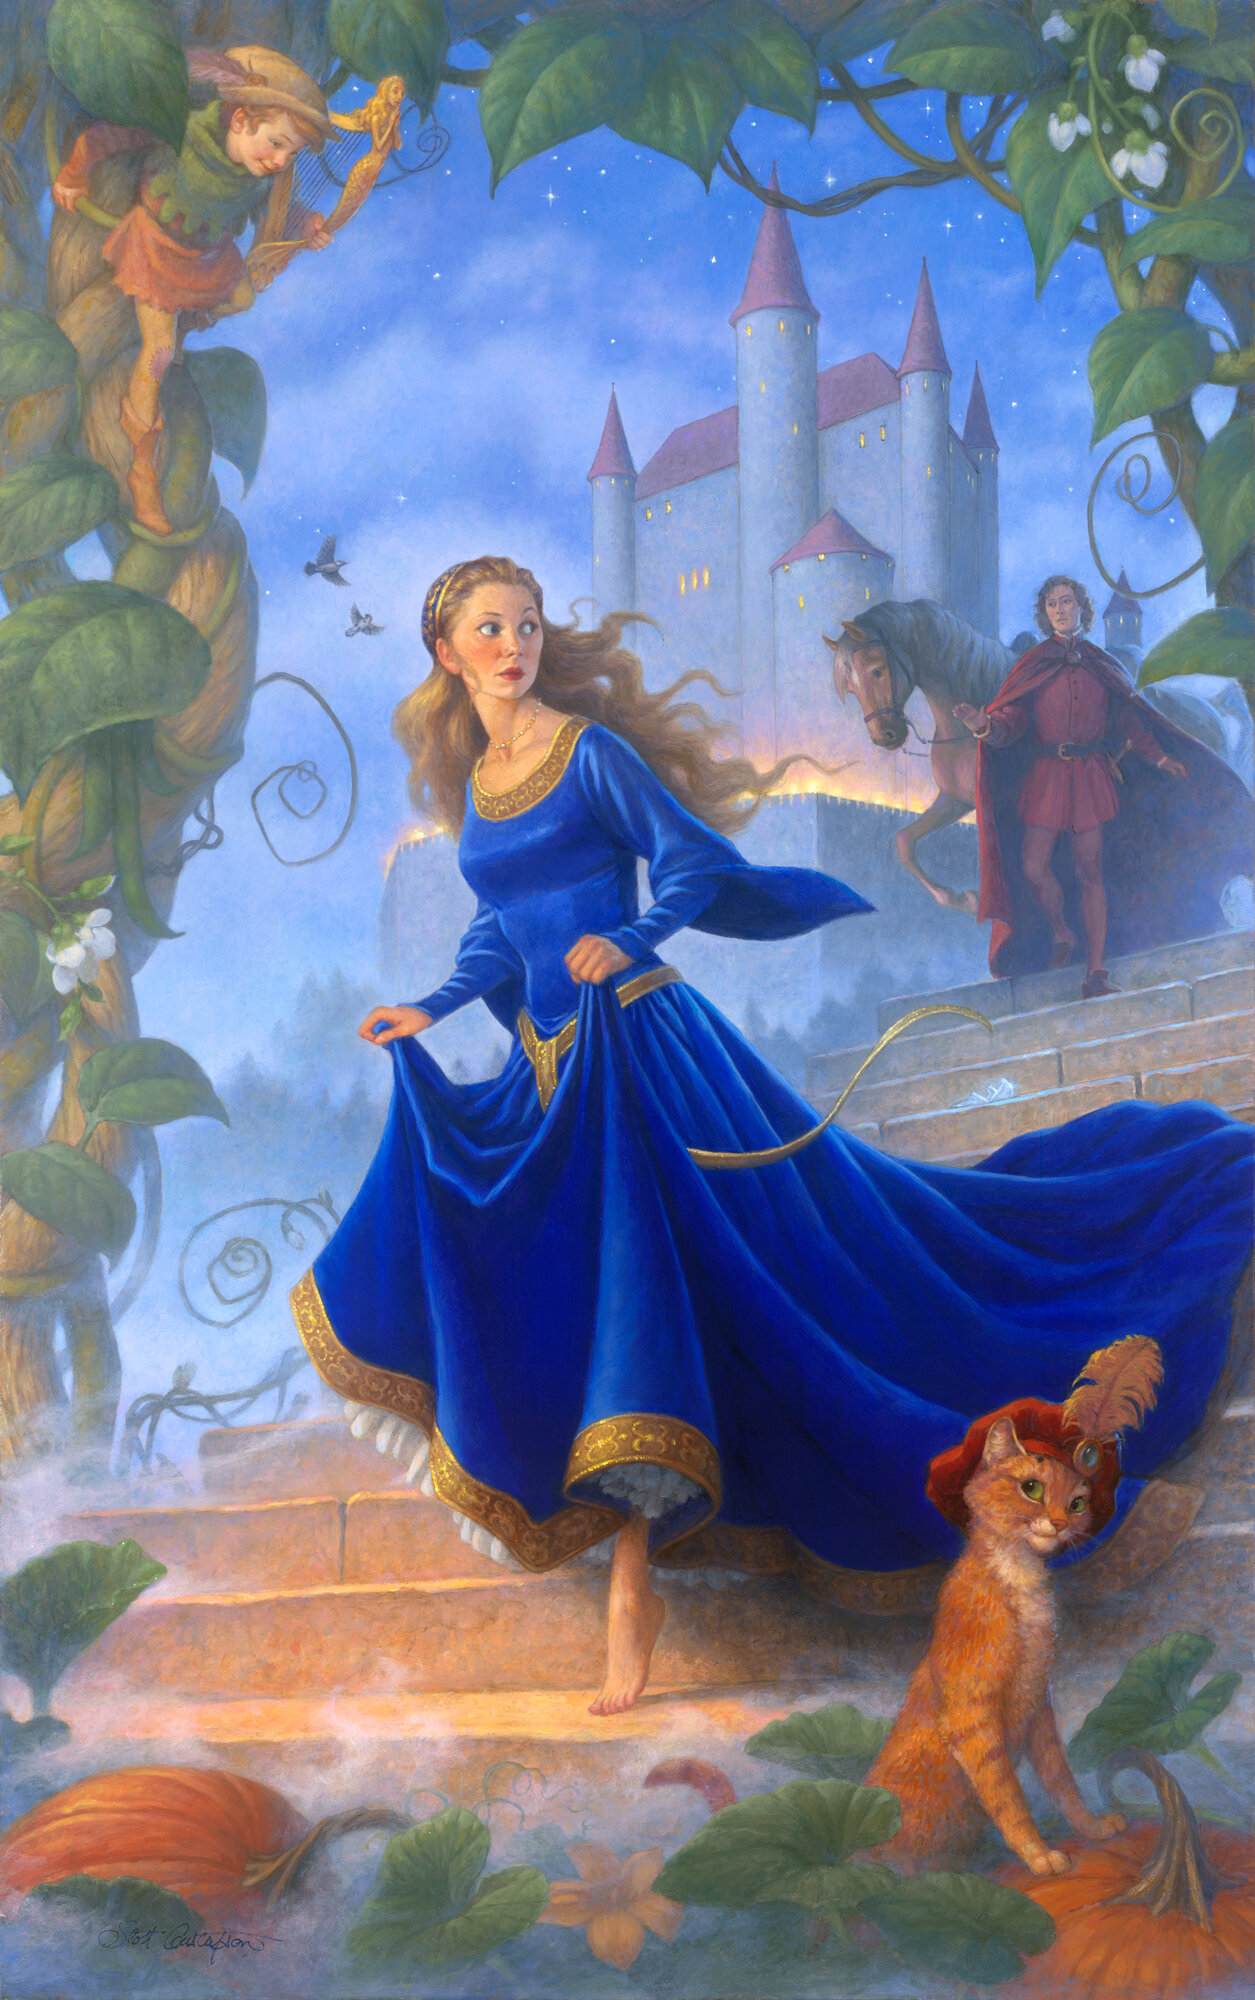 Cinderella and Sorcerer's Daughter